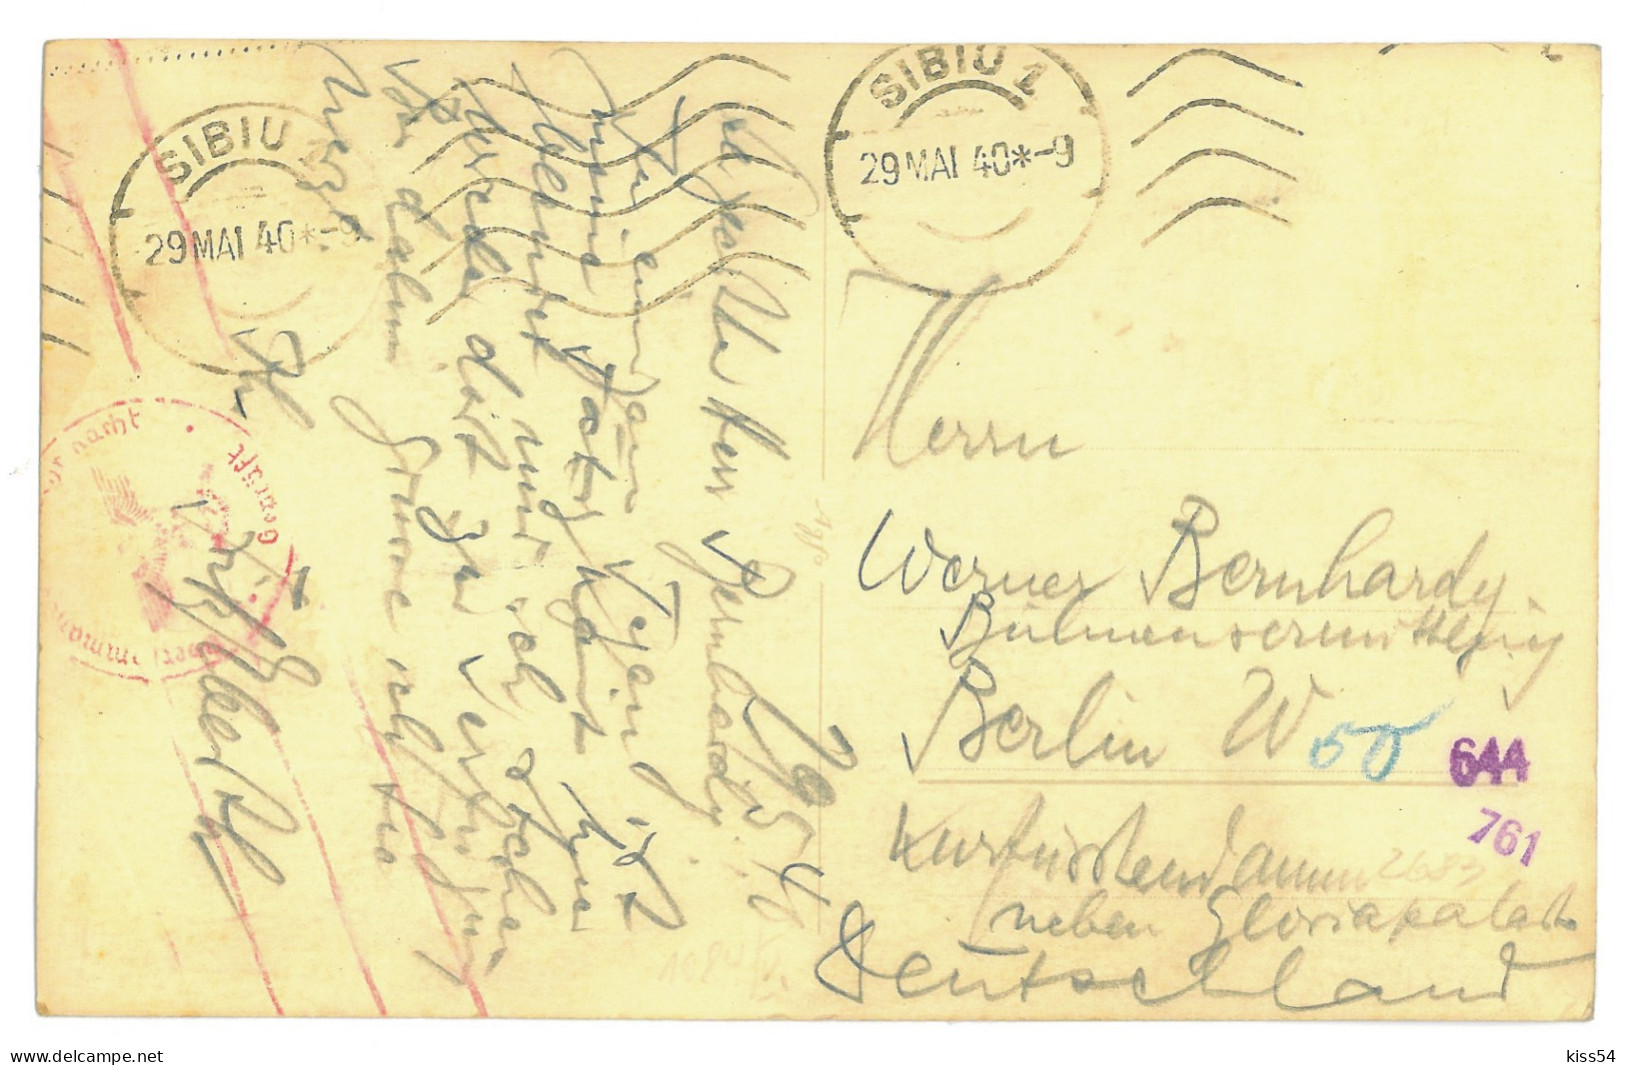 RO 81 - 16198 SIBIU, Romania - Old Postcard, CENSOR, Real PHOTO - Used - 1940 - Rumänien